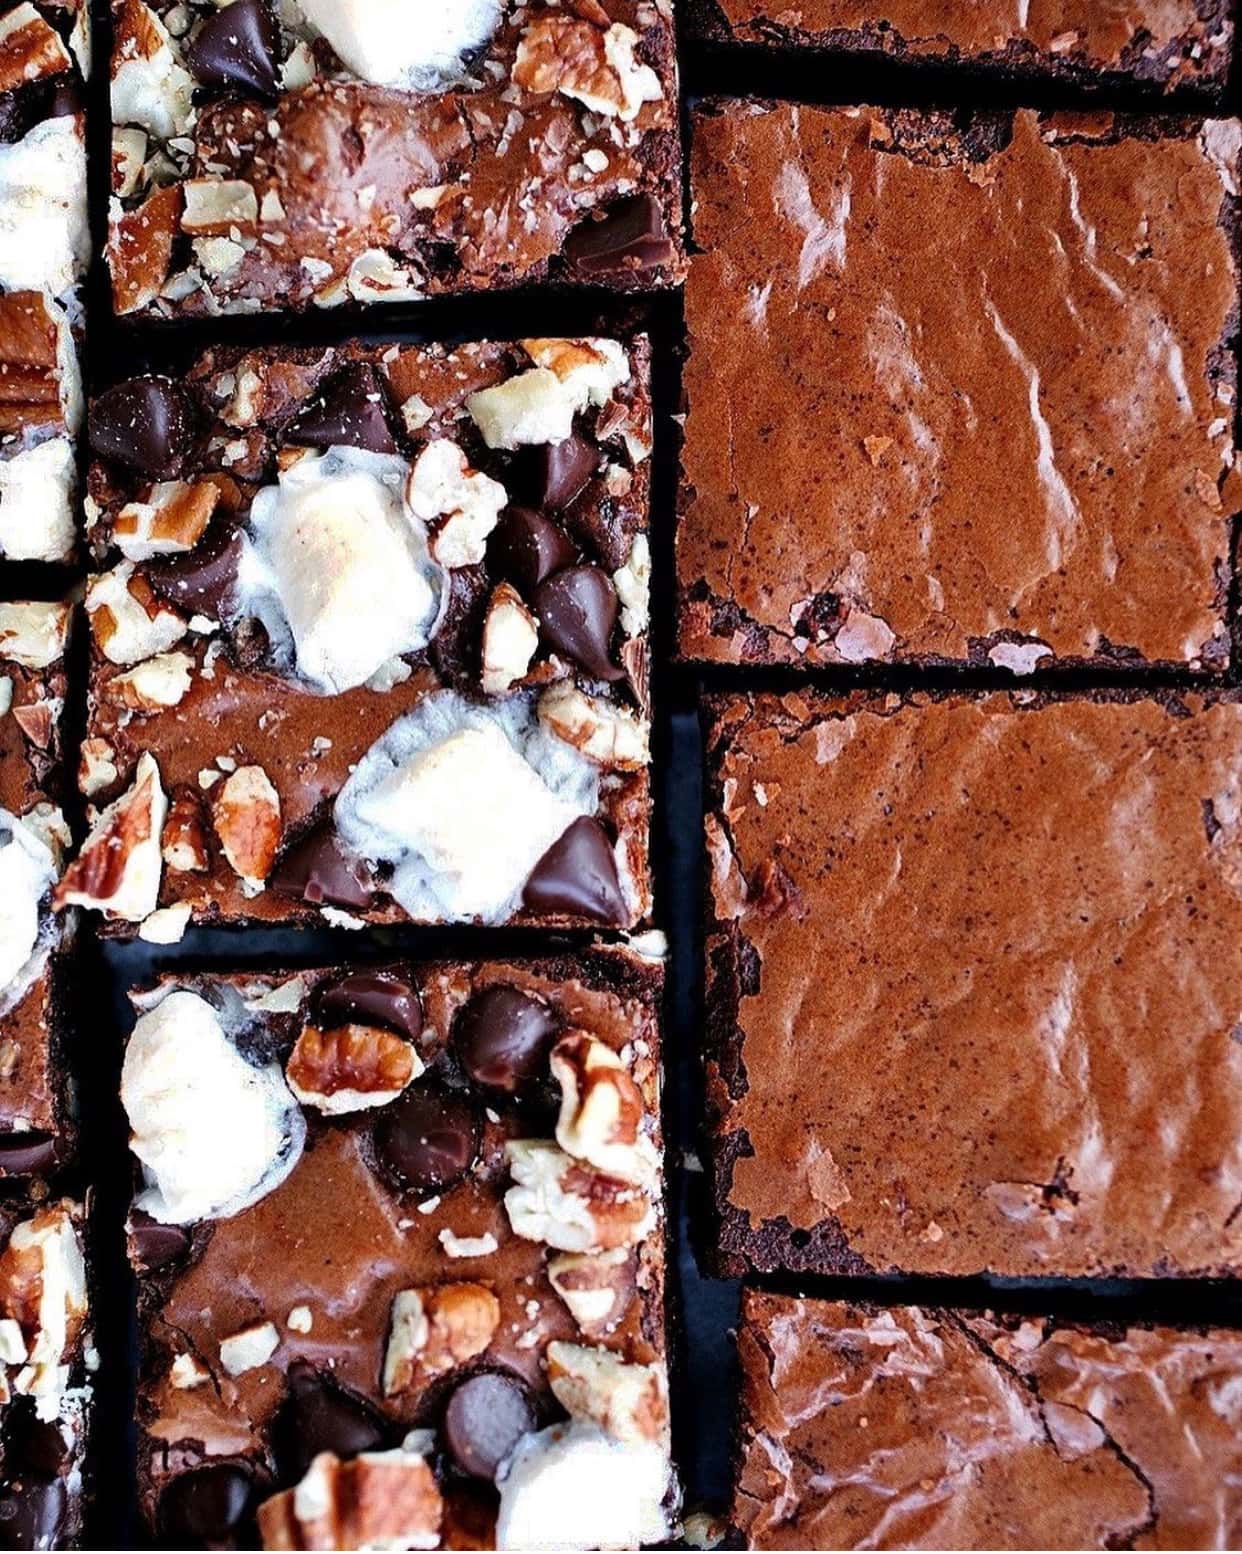 rocky road brownies next to regular brownies, cut in squares